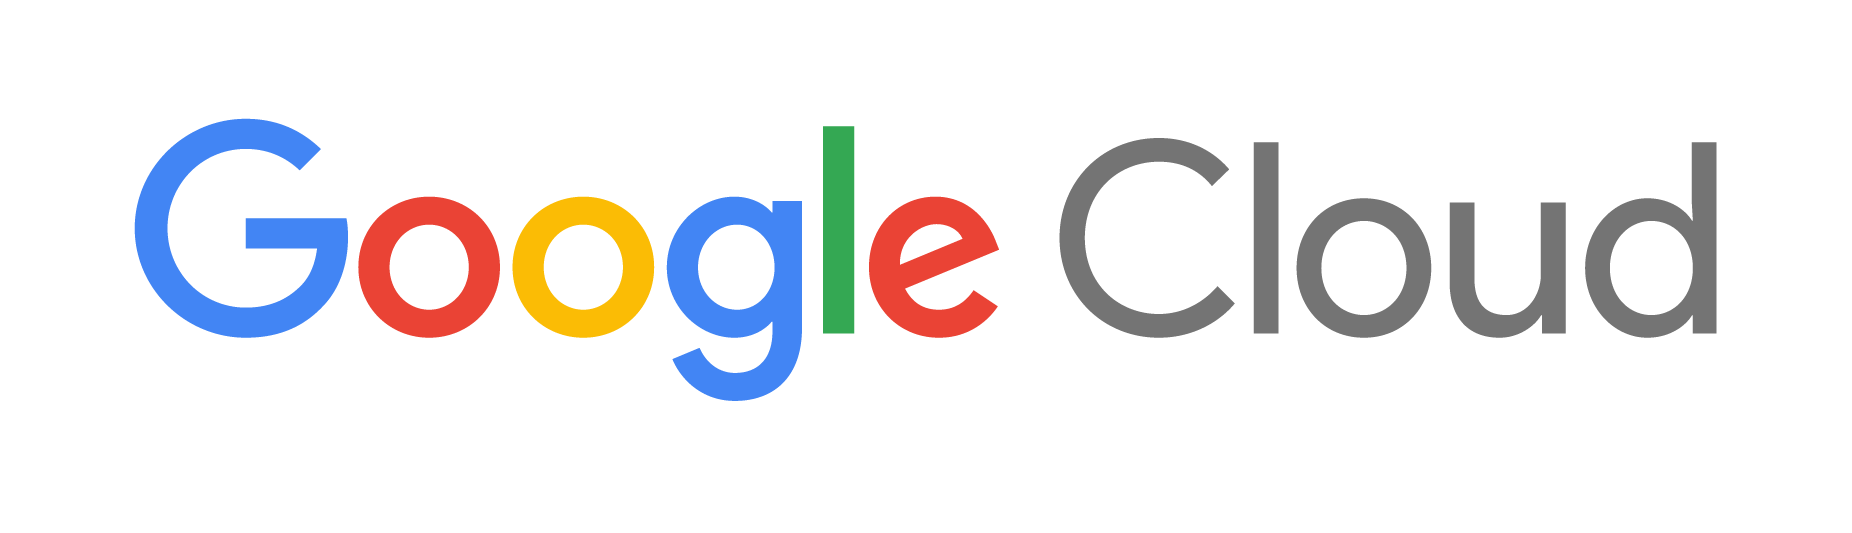 Google Cloud Logo PNG Image